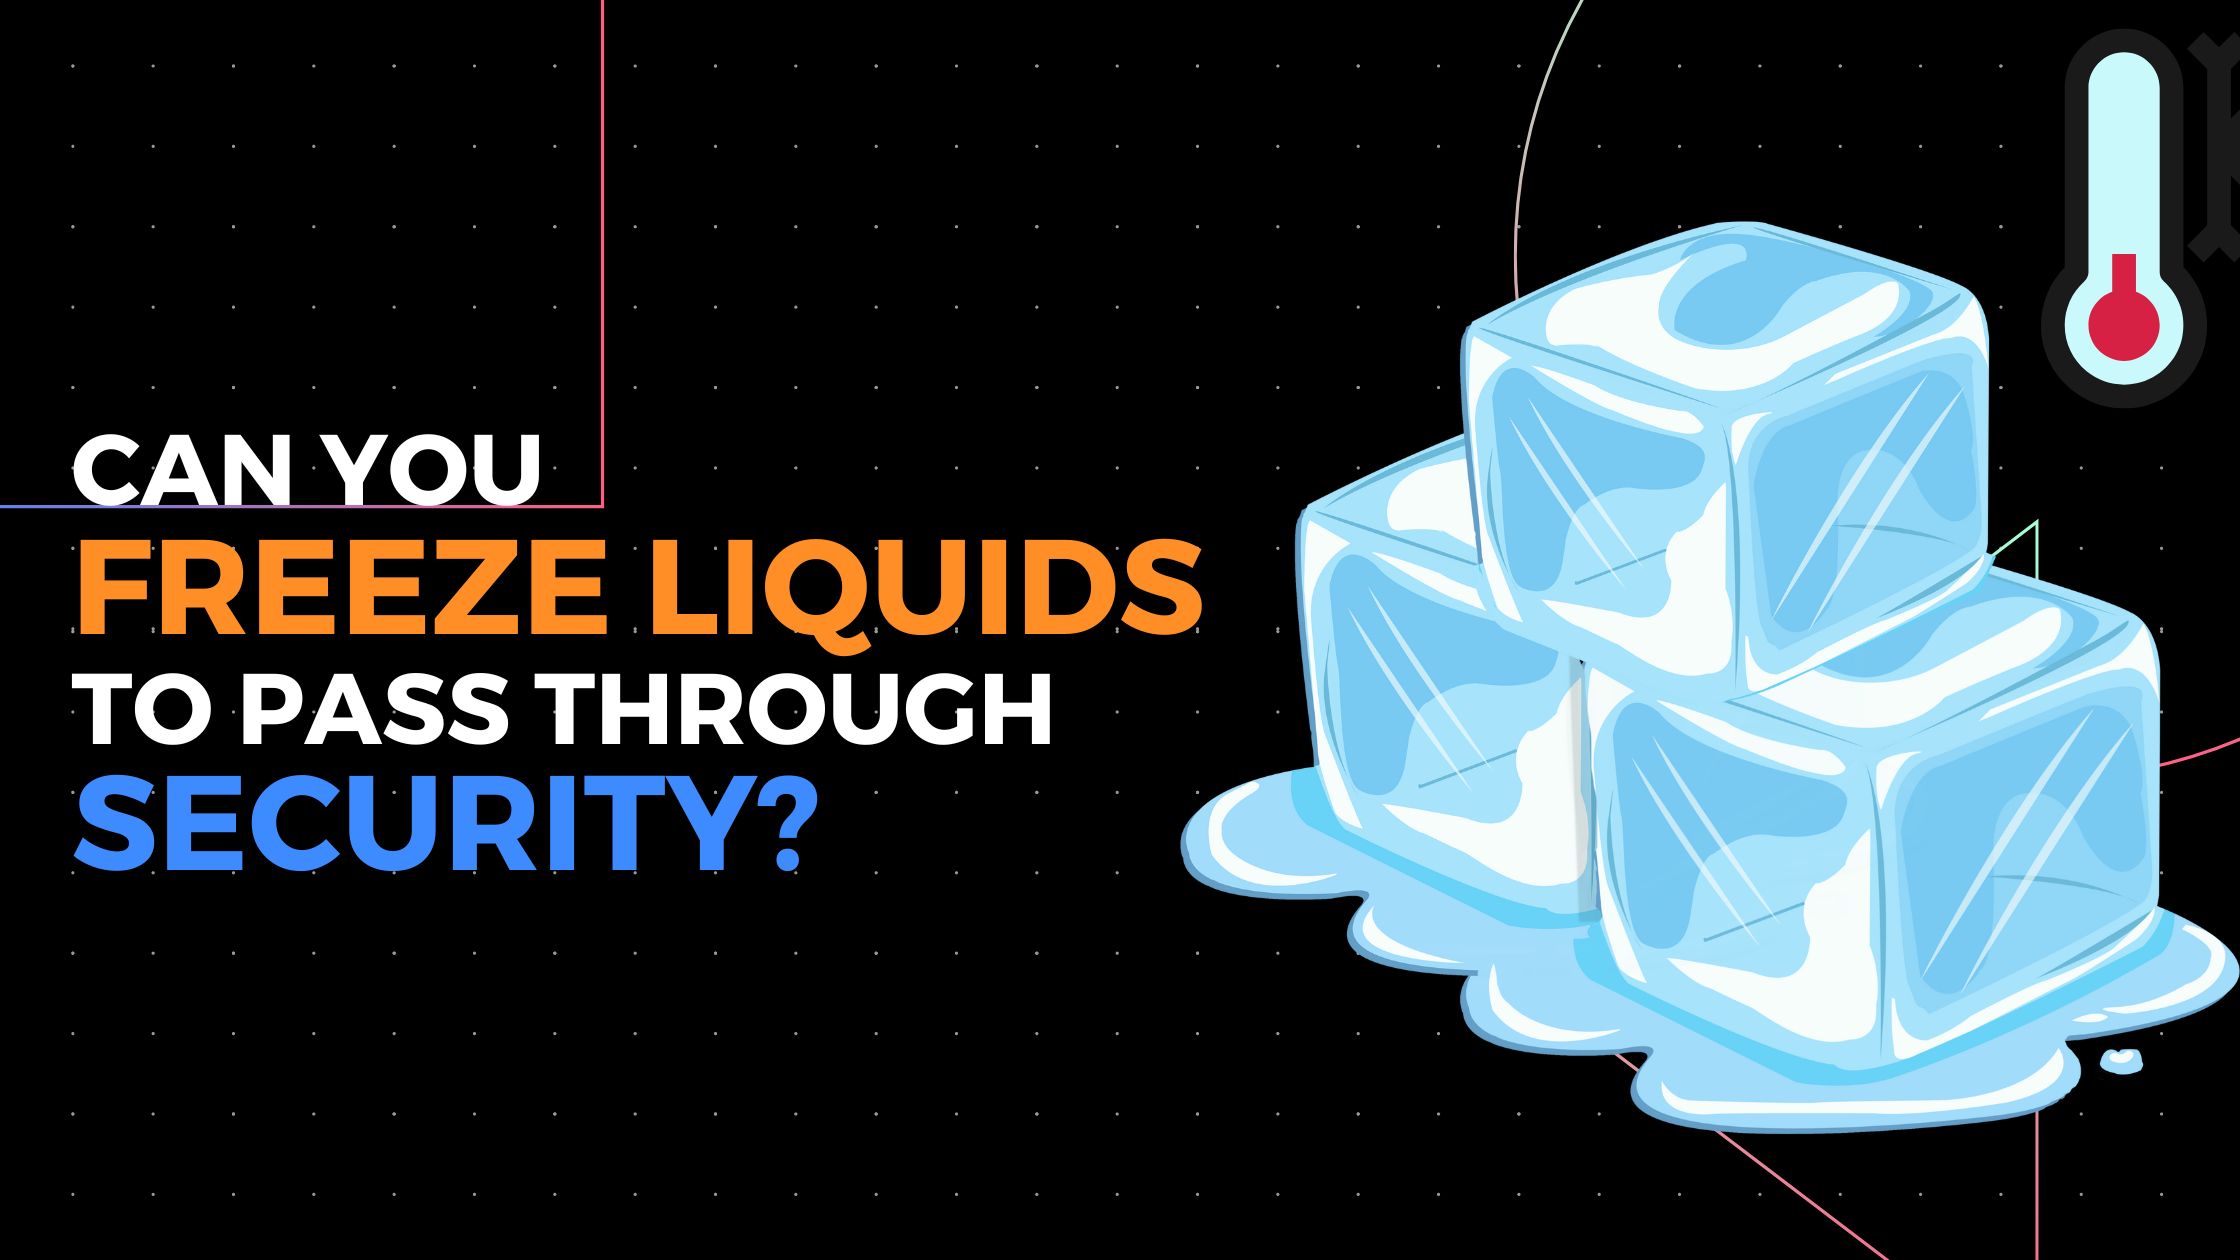 Can You Freeze Liquids To Pass Security Checks?